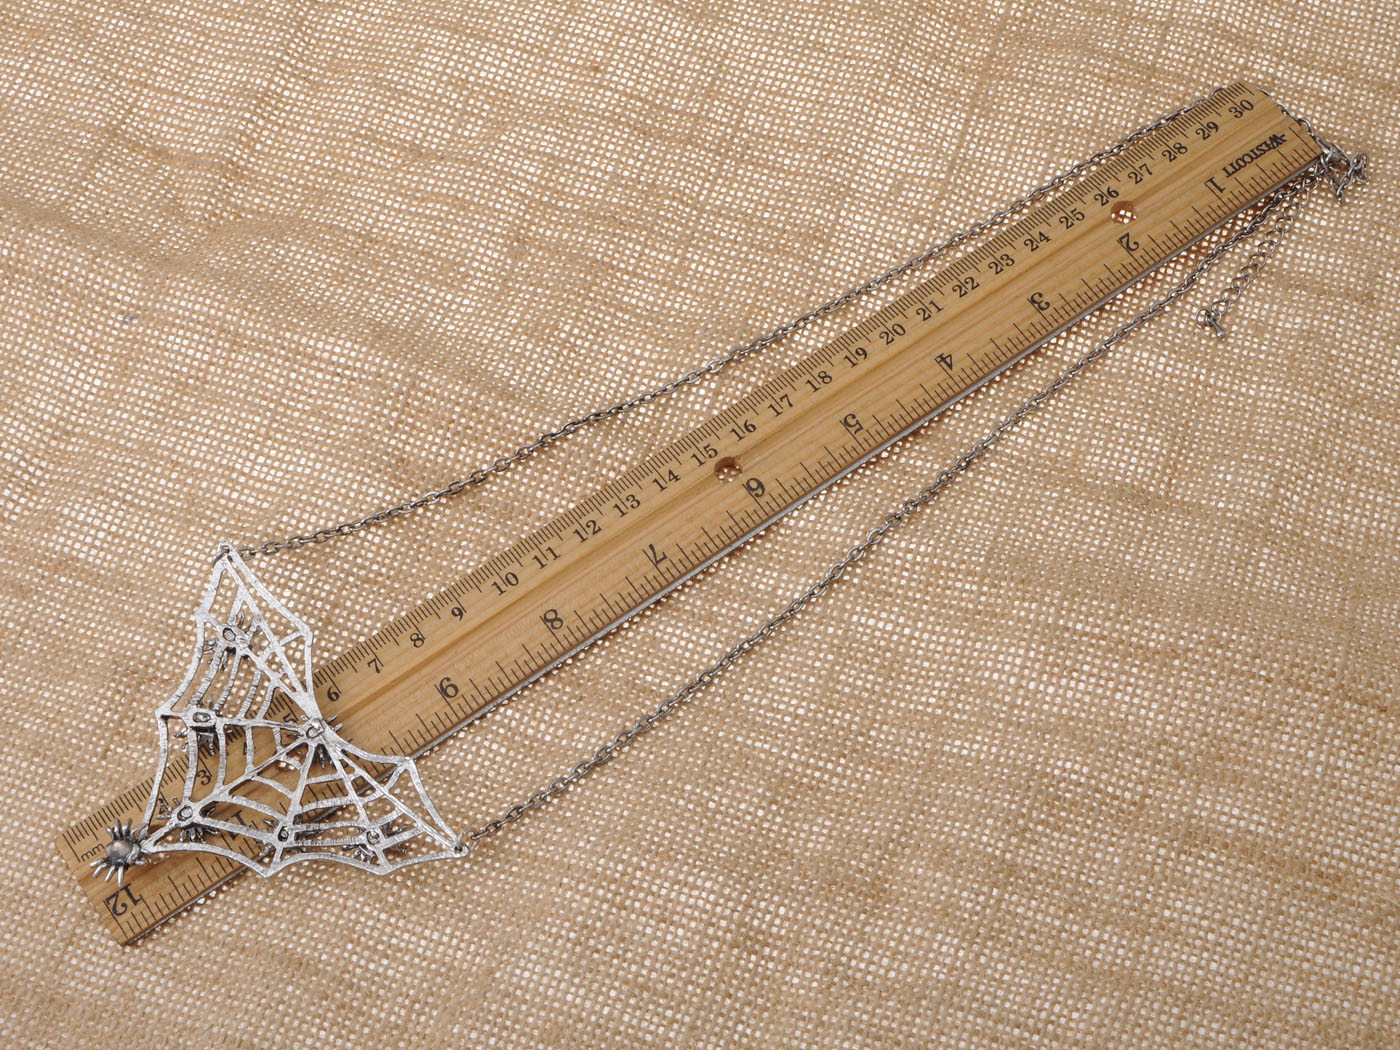 Gun Halloween Creepy Spider Web Bug Cutout Pendant Necklace